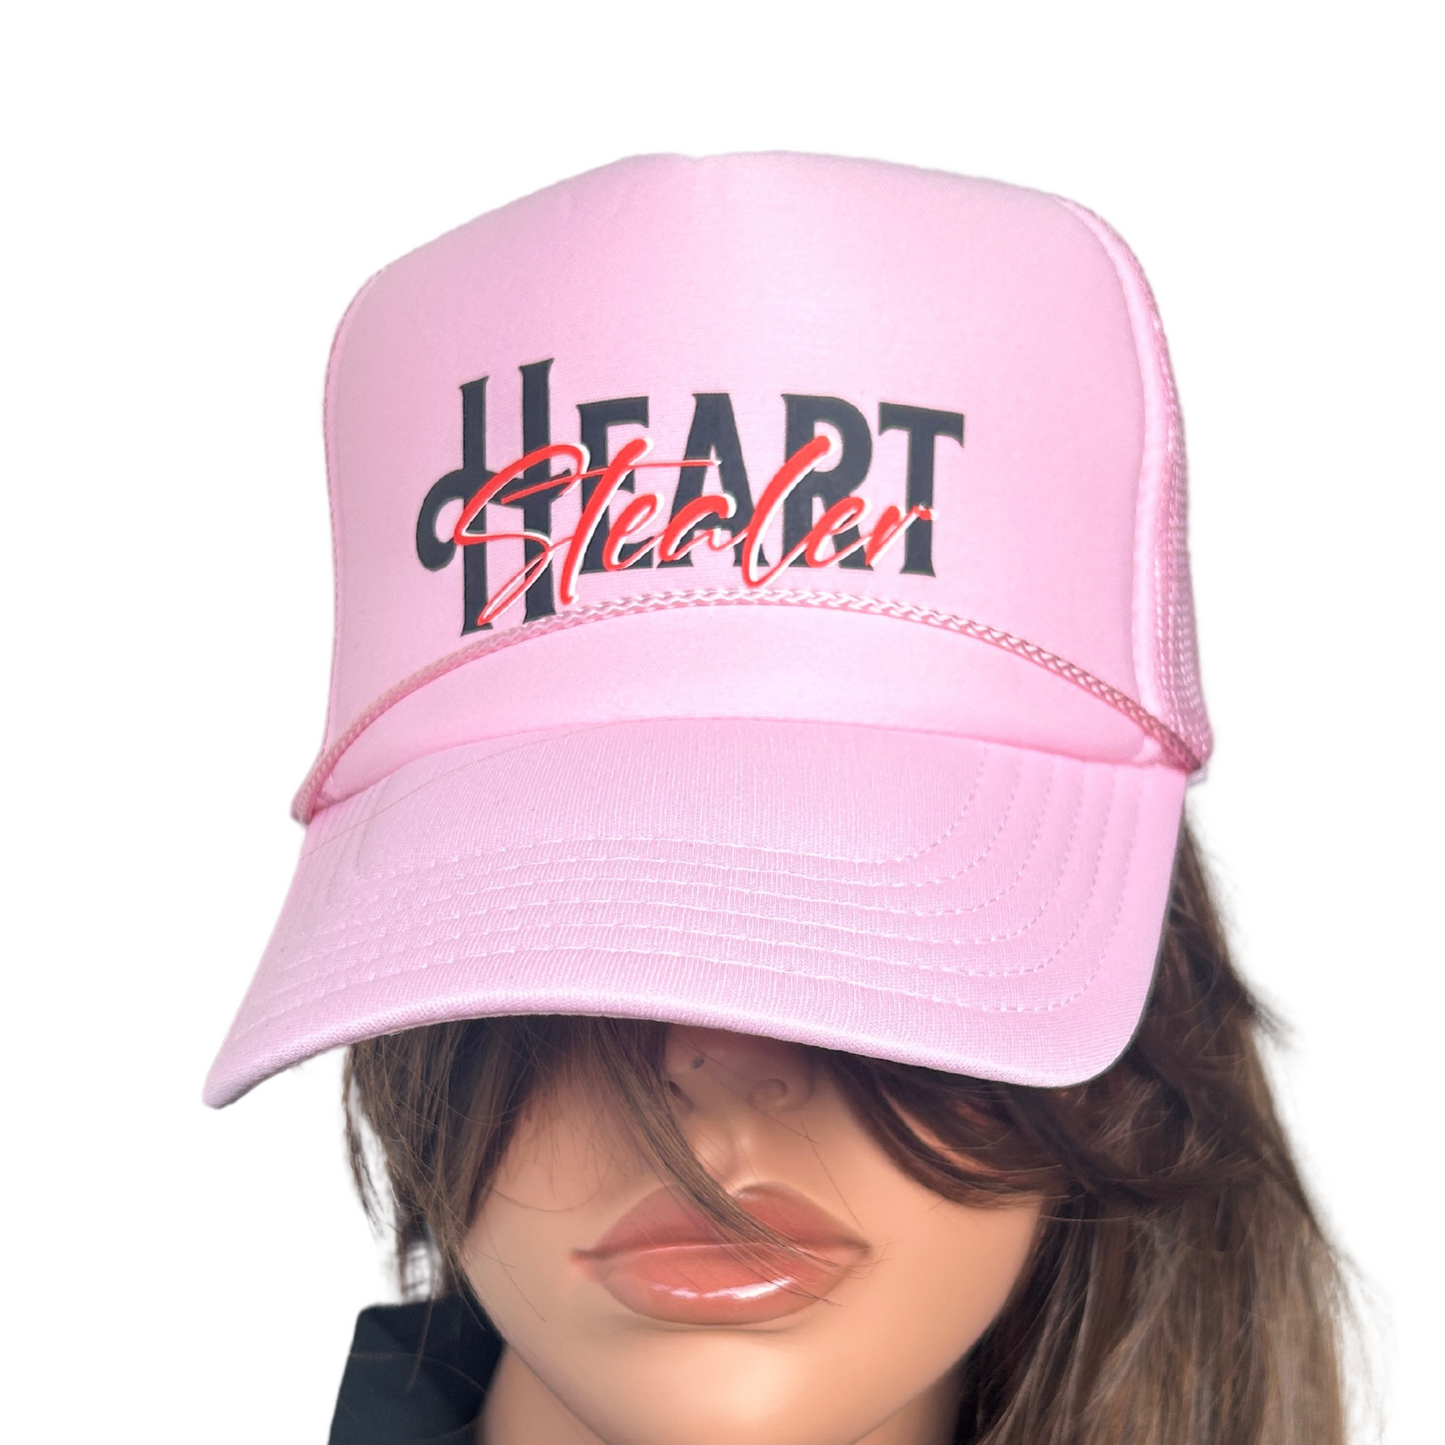 Heart Stealer Trucker Hat